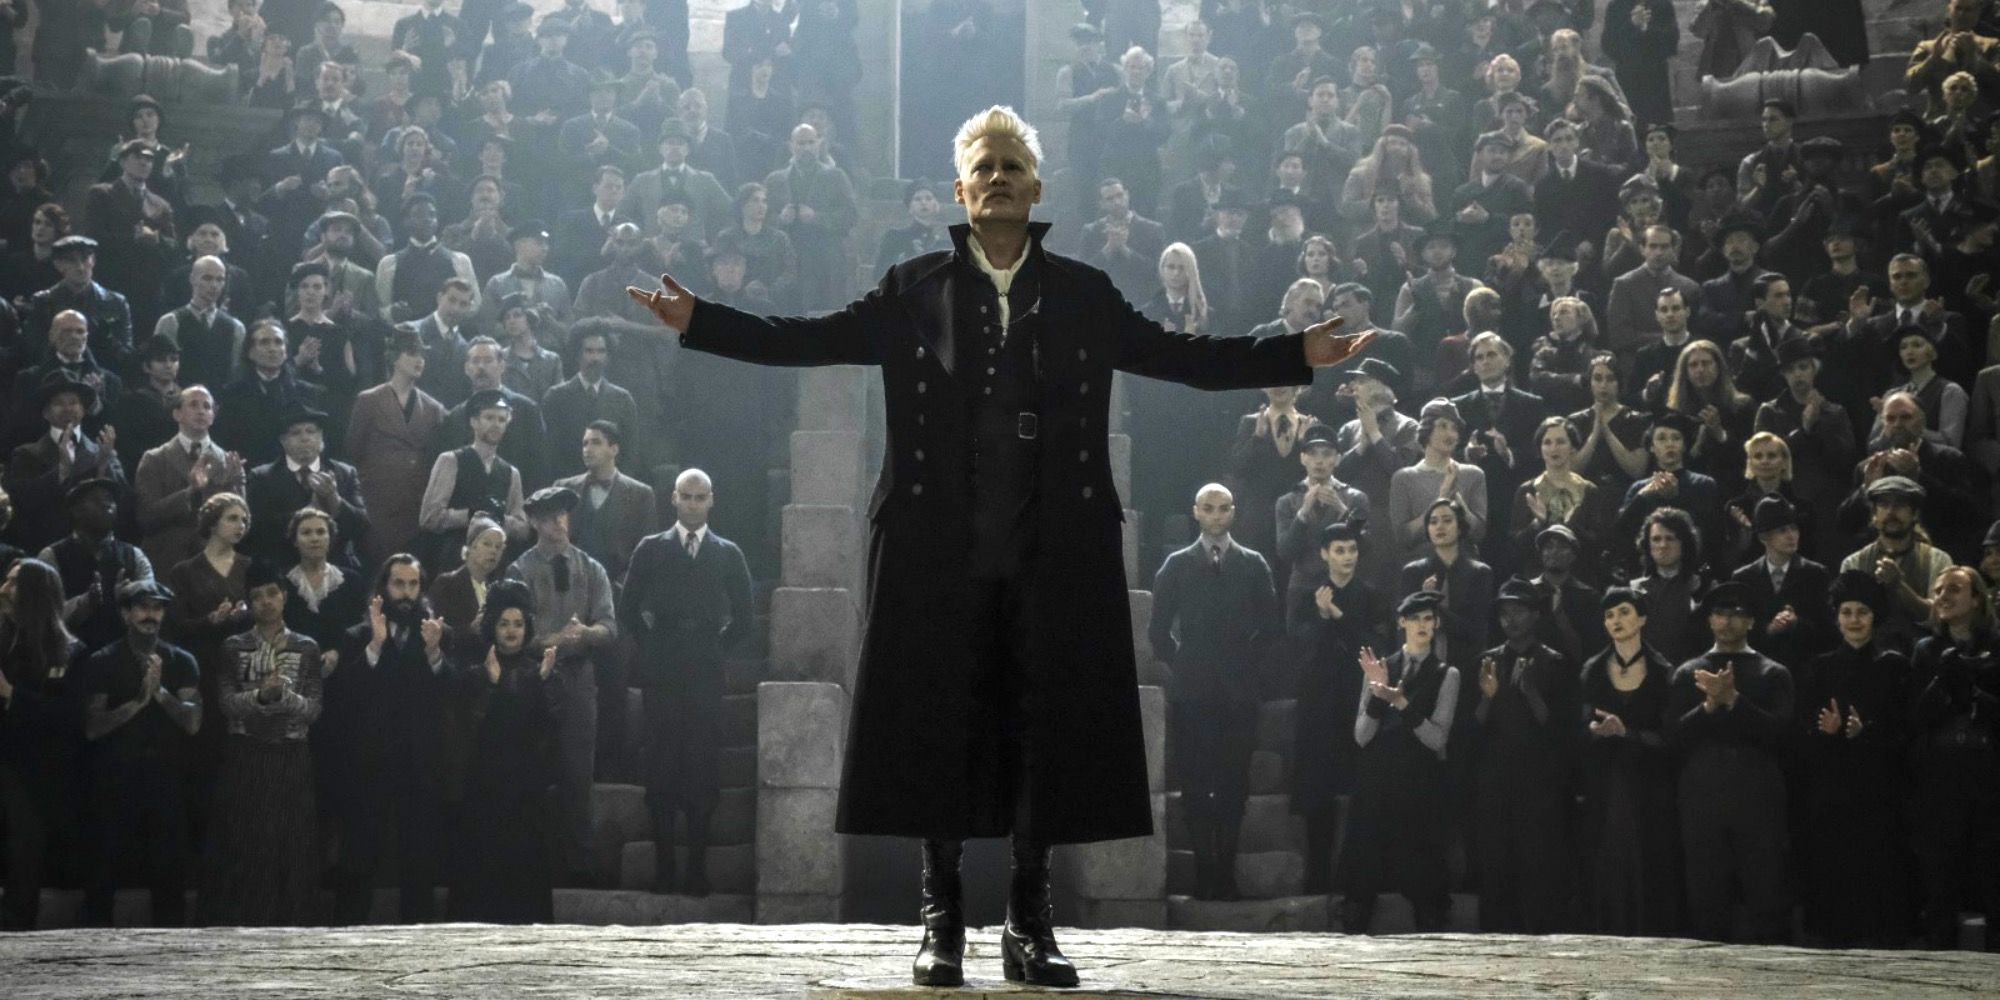 Johnny Depp as Grindelwald in Fantastic Beasts The Crimes of Grindelwald